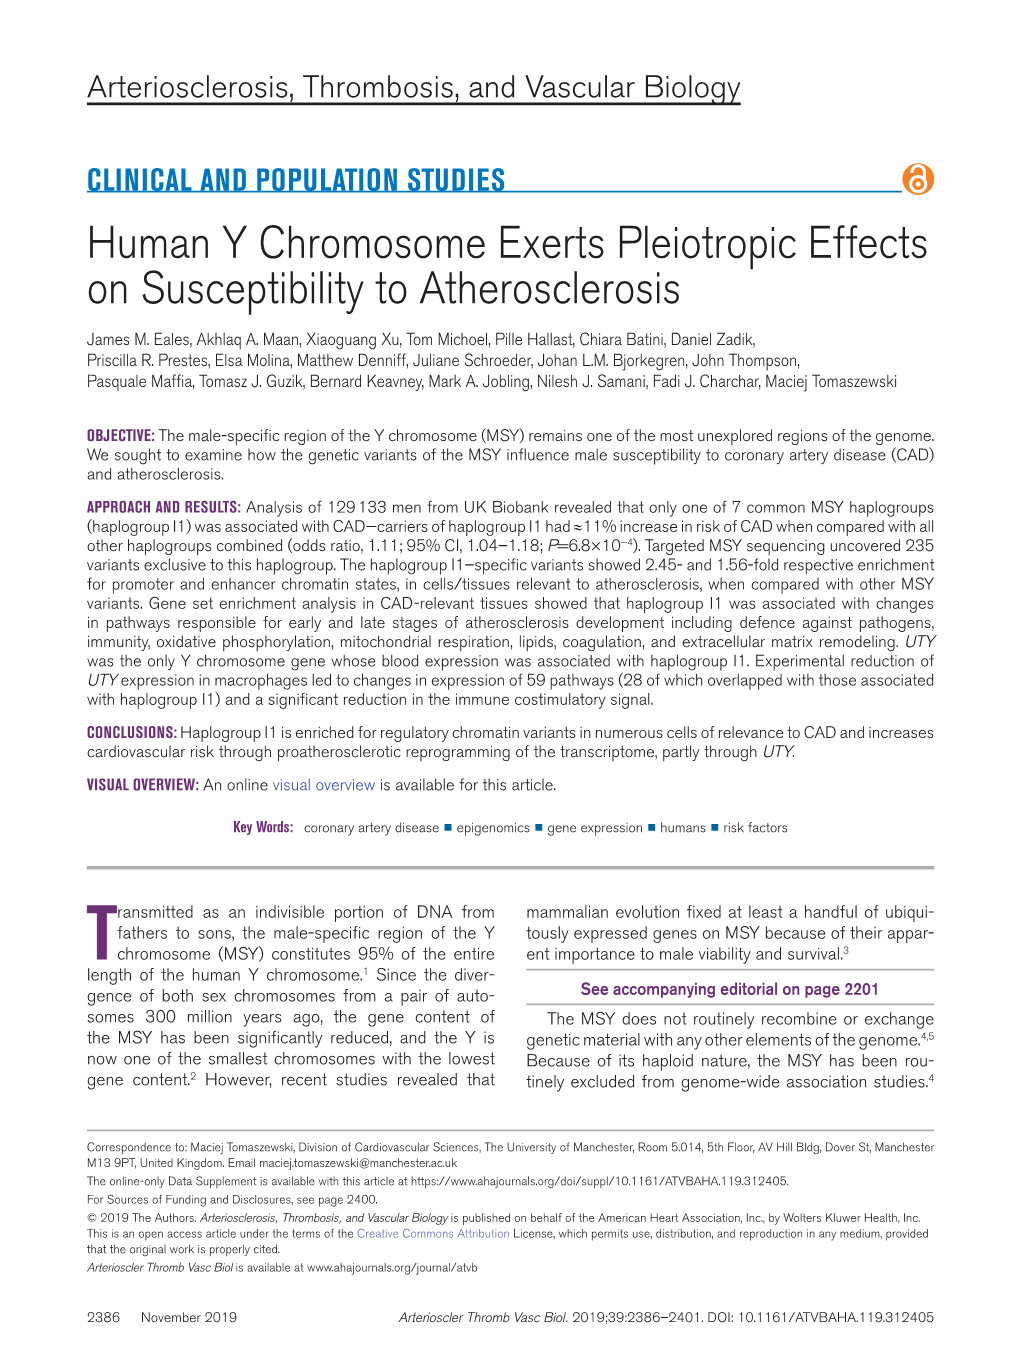 Human Y Chromosome Exerts Pleiotropic Effects on Susceptibility to Atherosclerosis James M